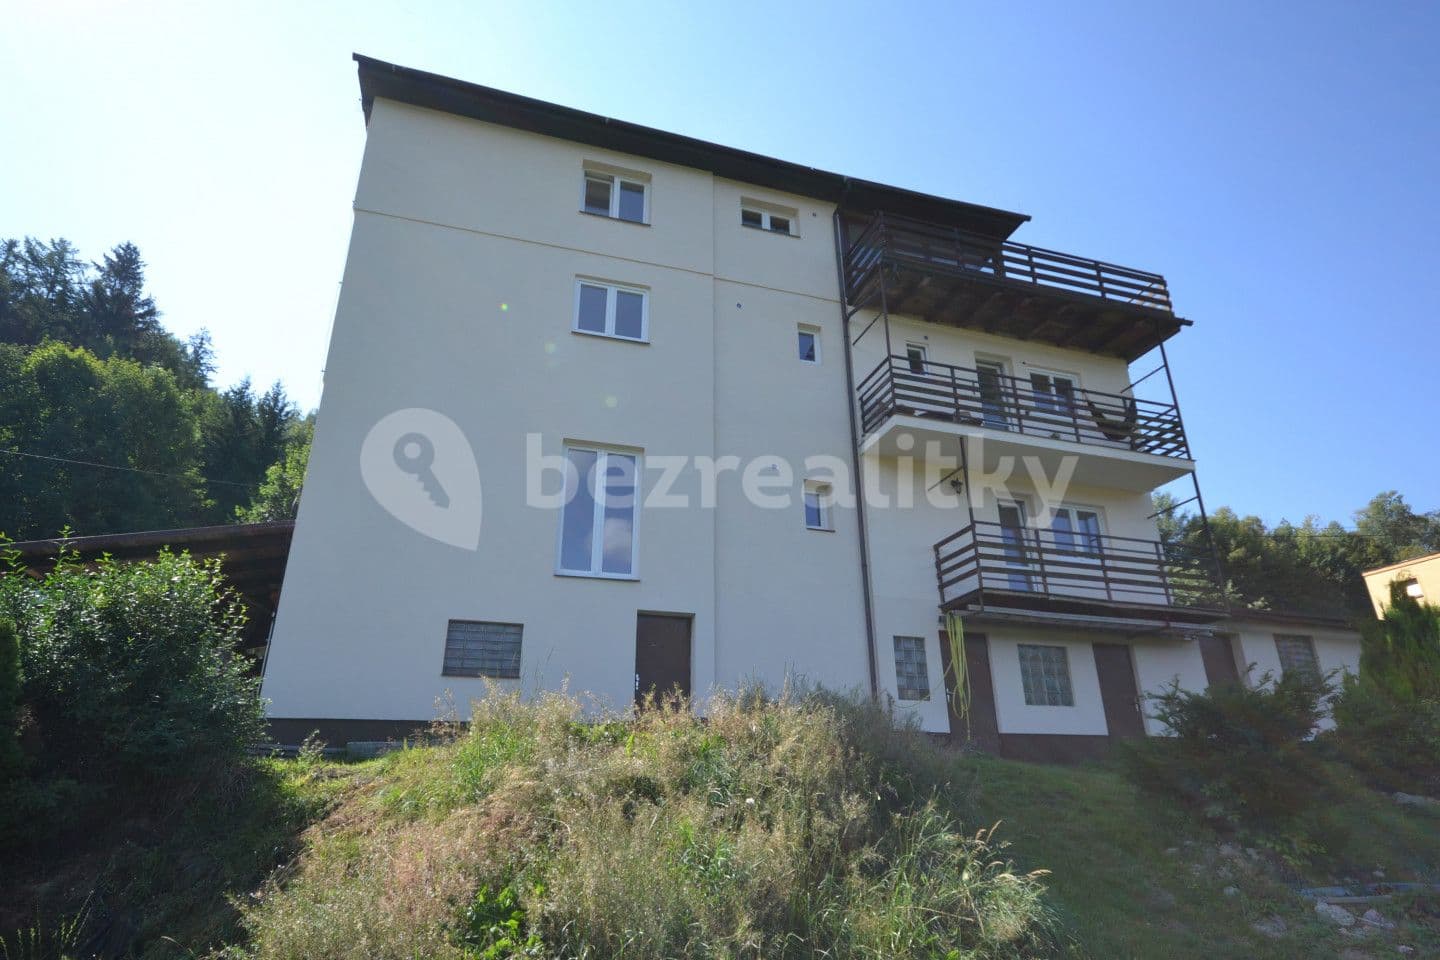 Predaj bytu 3-izbový 61 m², U Staré lípy, Jablonec nad Nisou, Liberecký kraj